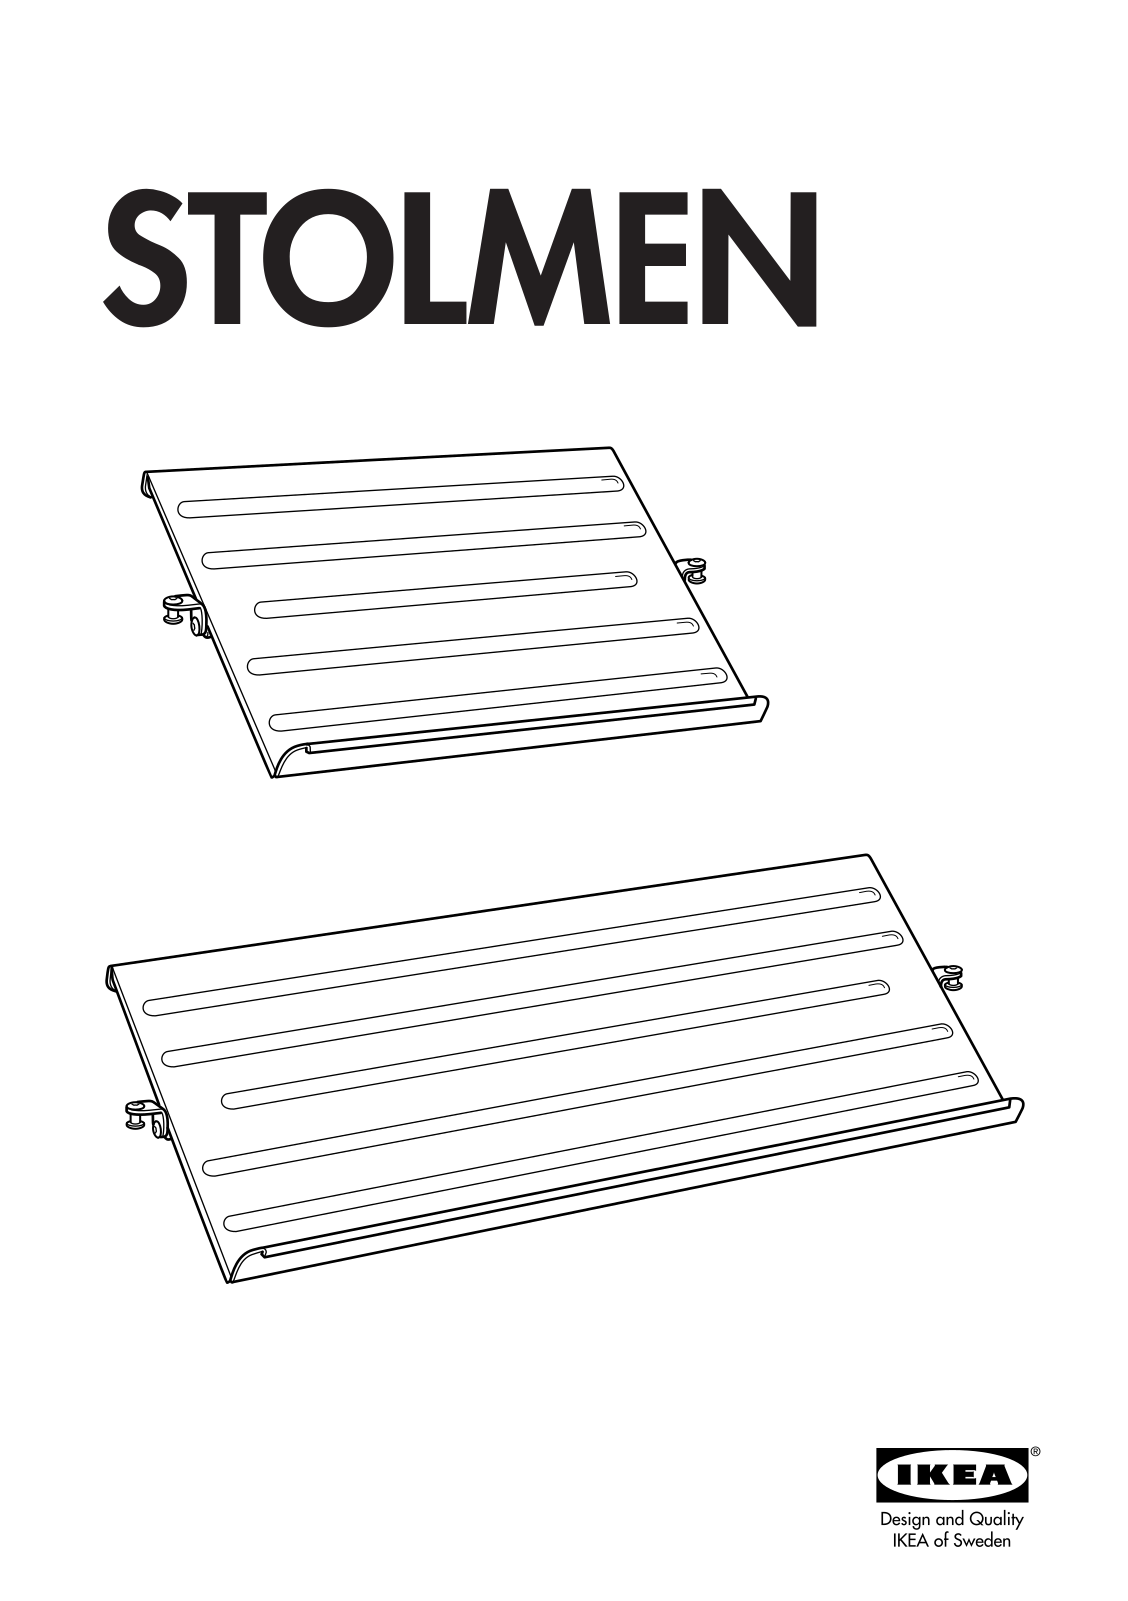 IKEA STOLMEN SHOE RACK 43 14, STOLMEN SHOE RACK 21 58 Assembly Instruction